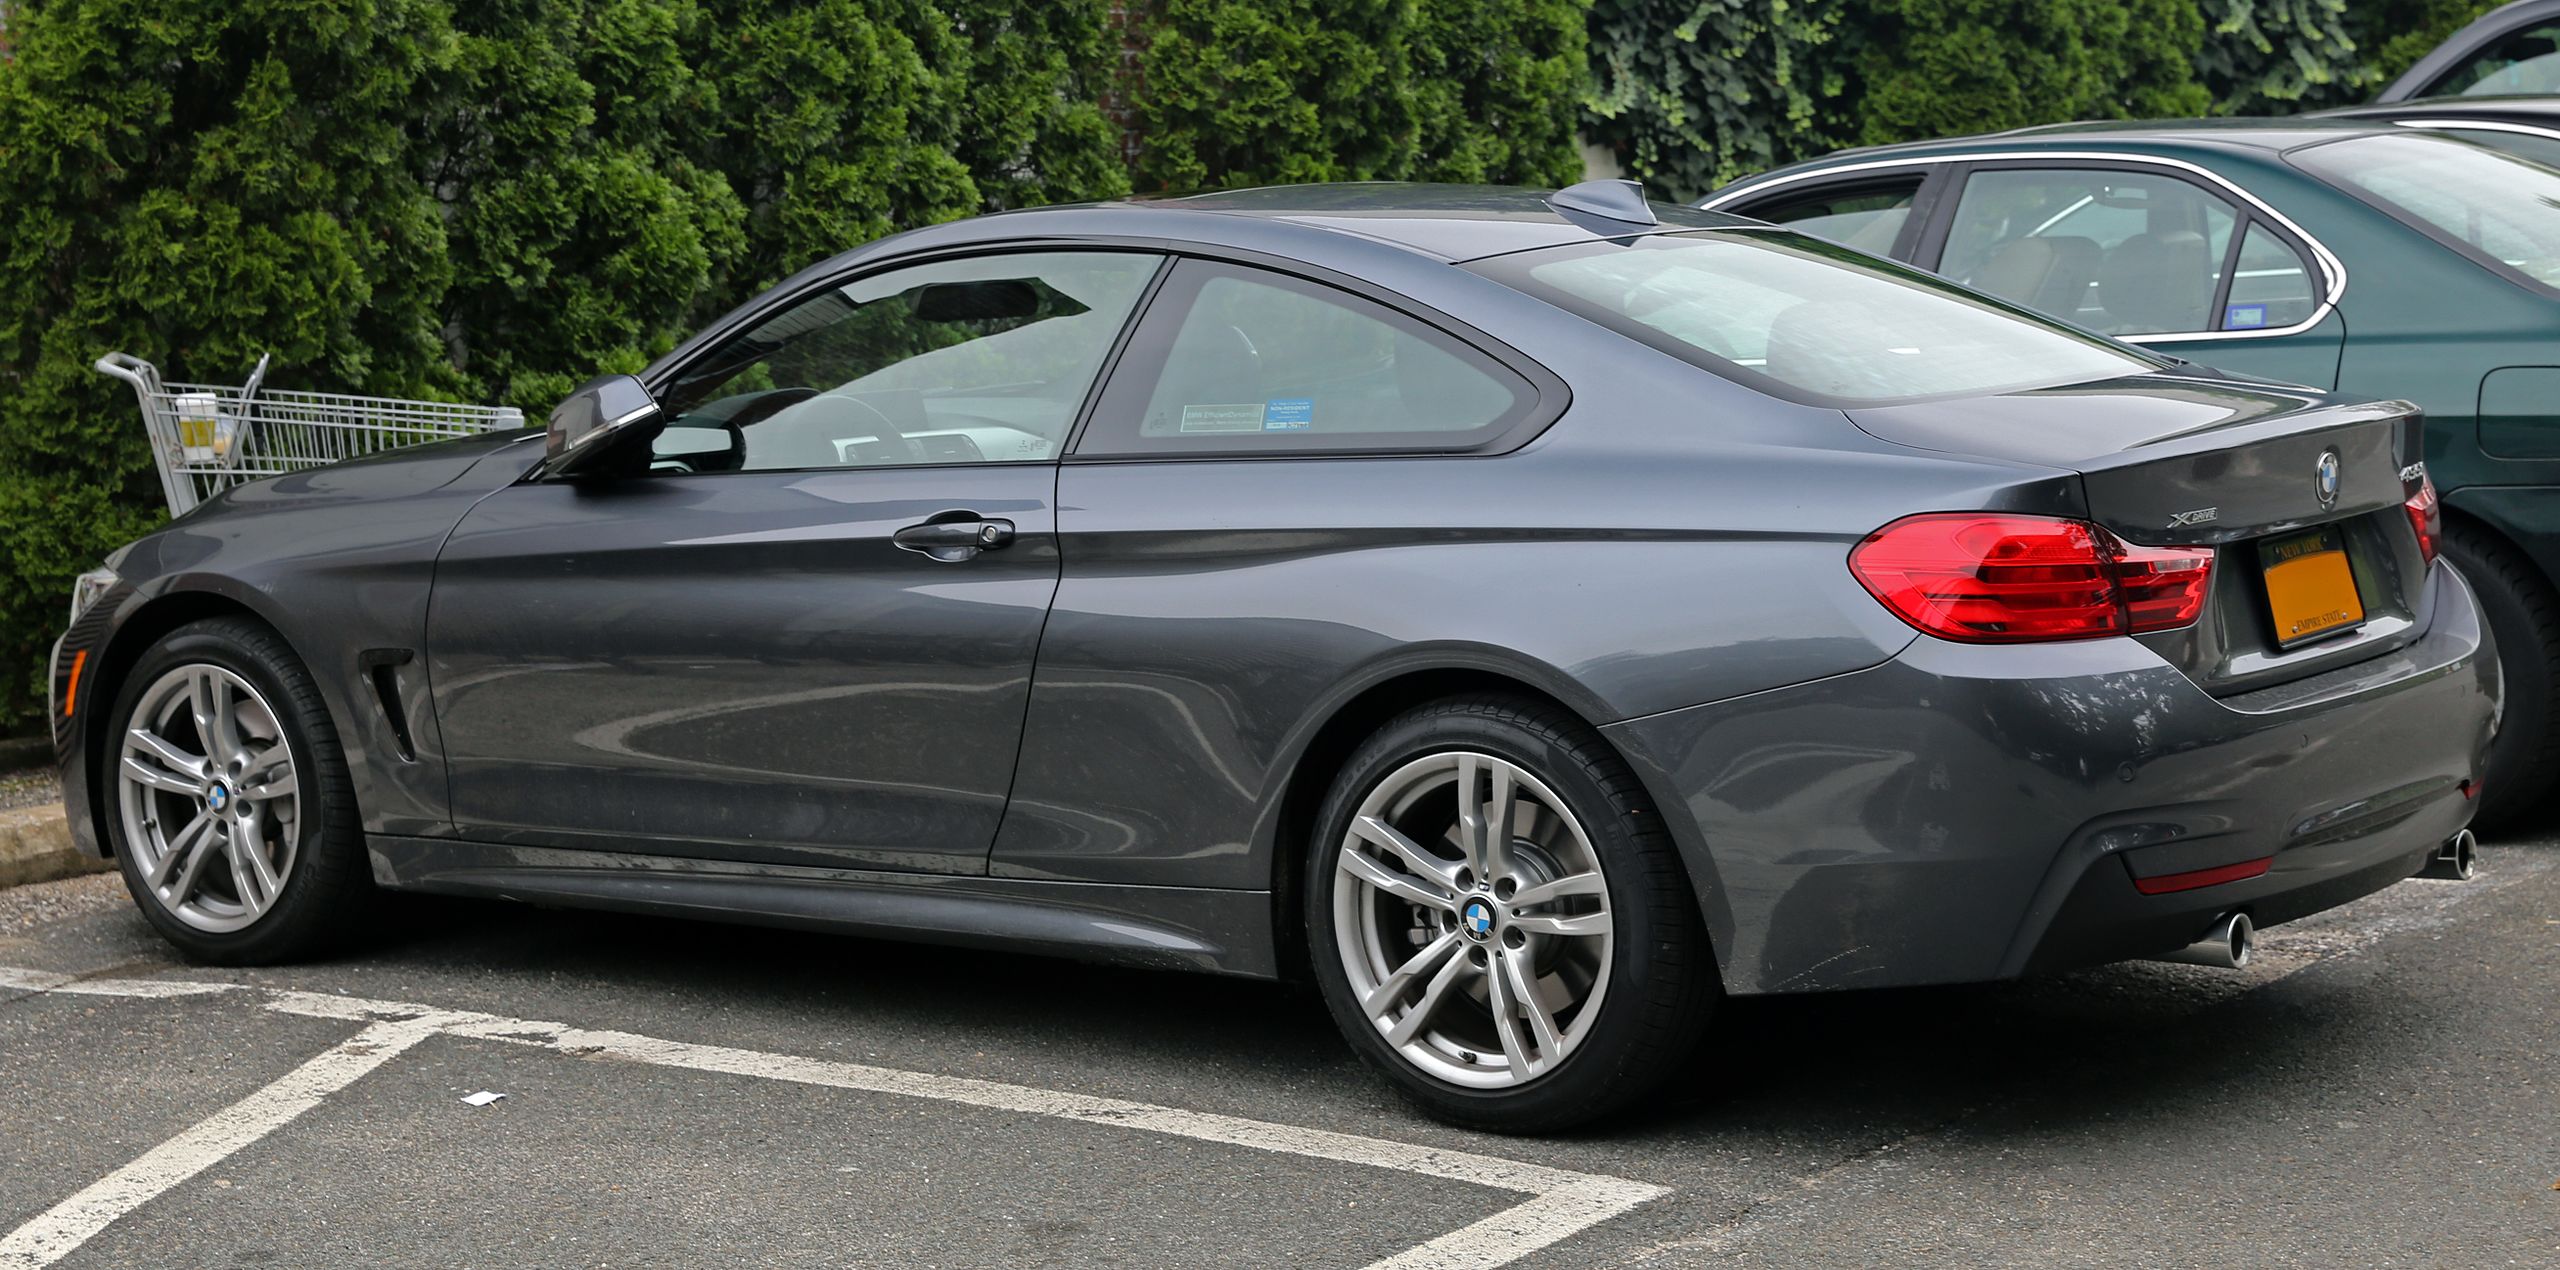 File:2014 BMW 435i Coupé xDrive (rear left).jpg - Wikimedia Commons